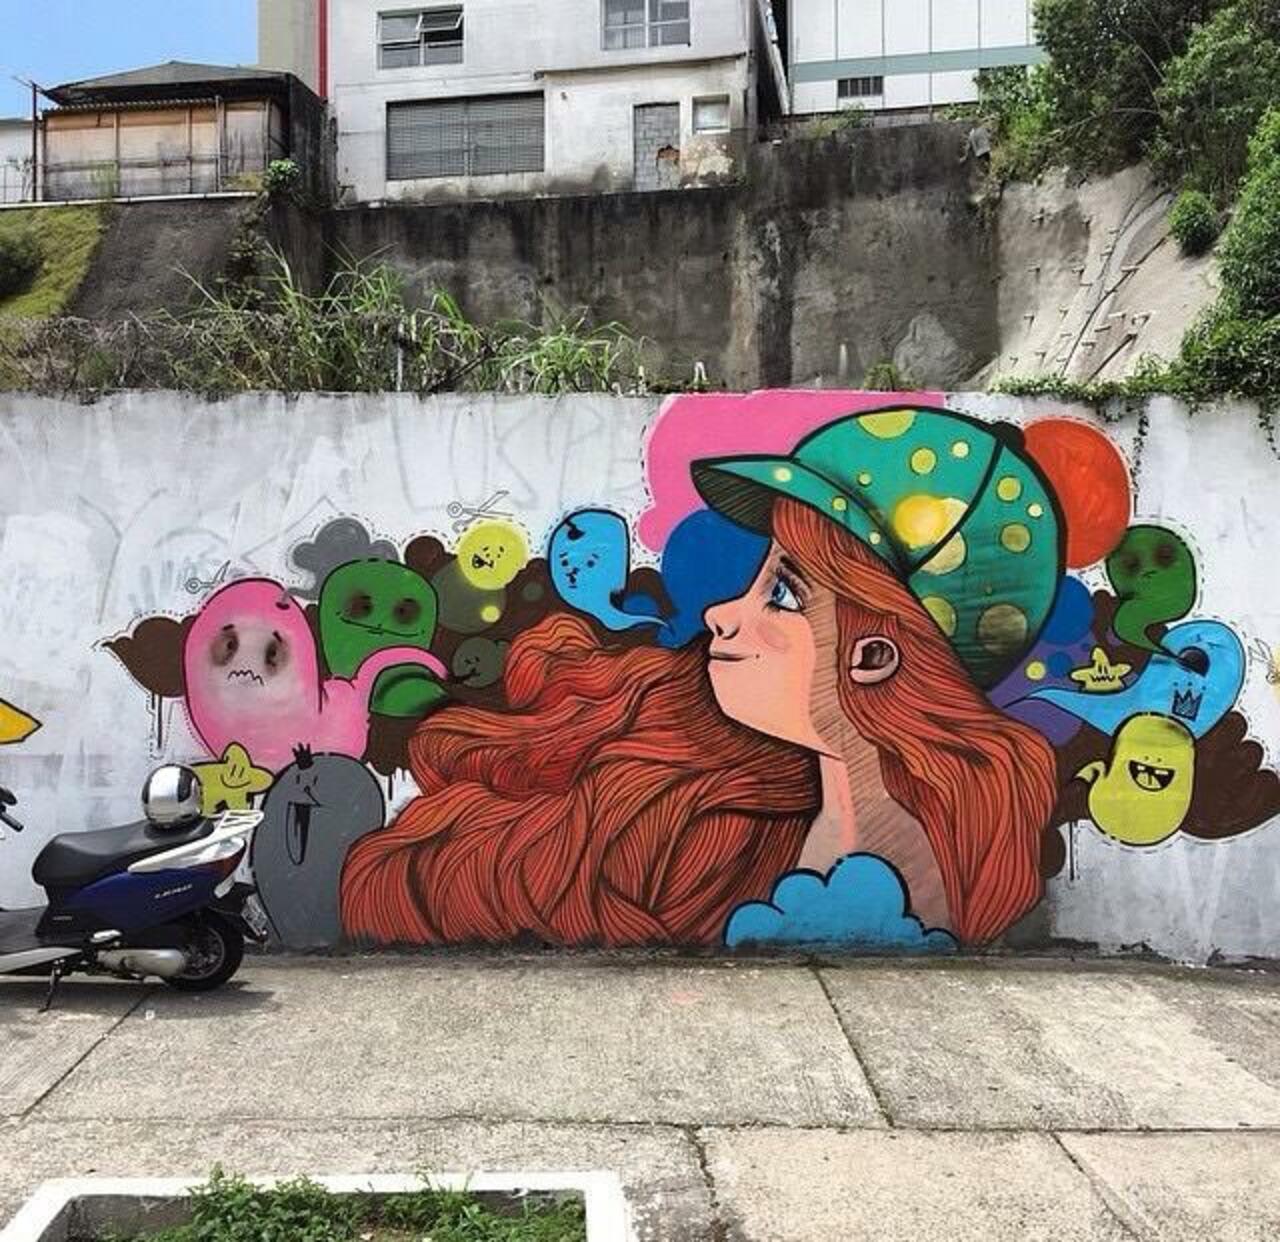 Endearing Street Art by Vupulos in São Paulo, Brazil 

#art #mural #graffiti #streetart http://t.co/QJHVZhxTSc